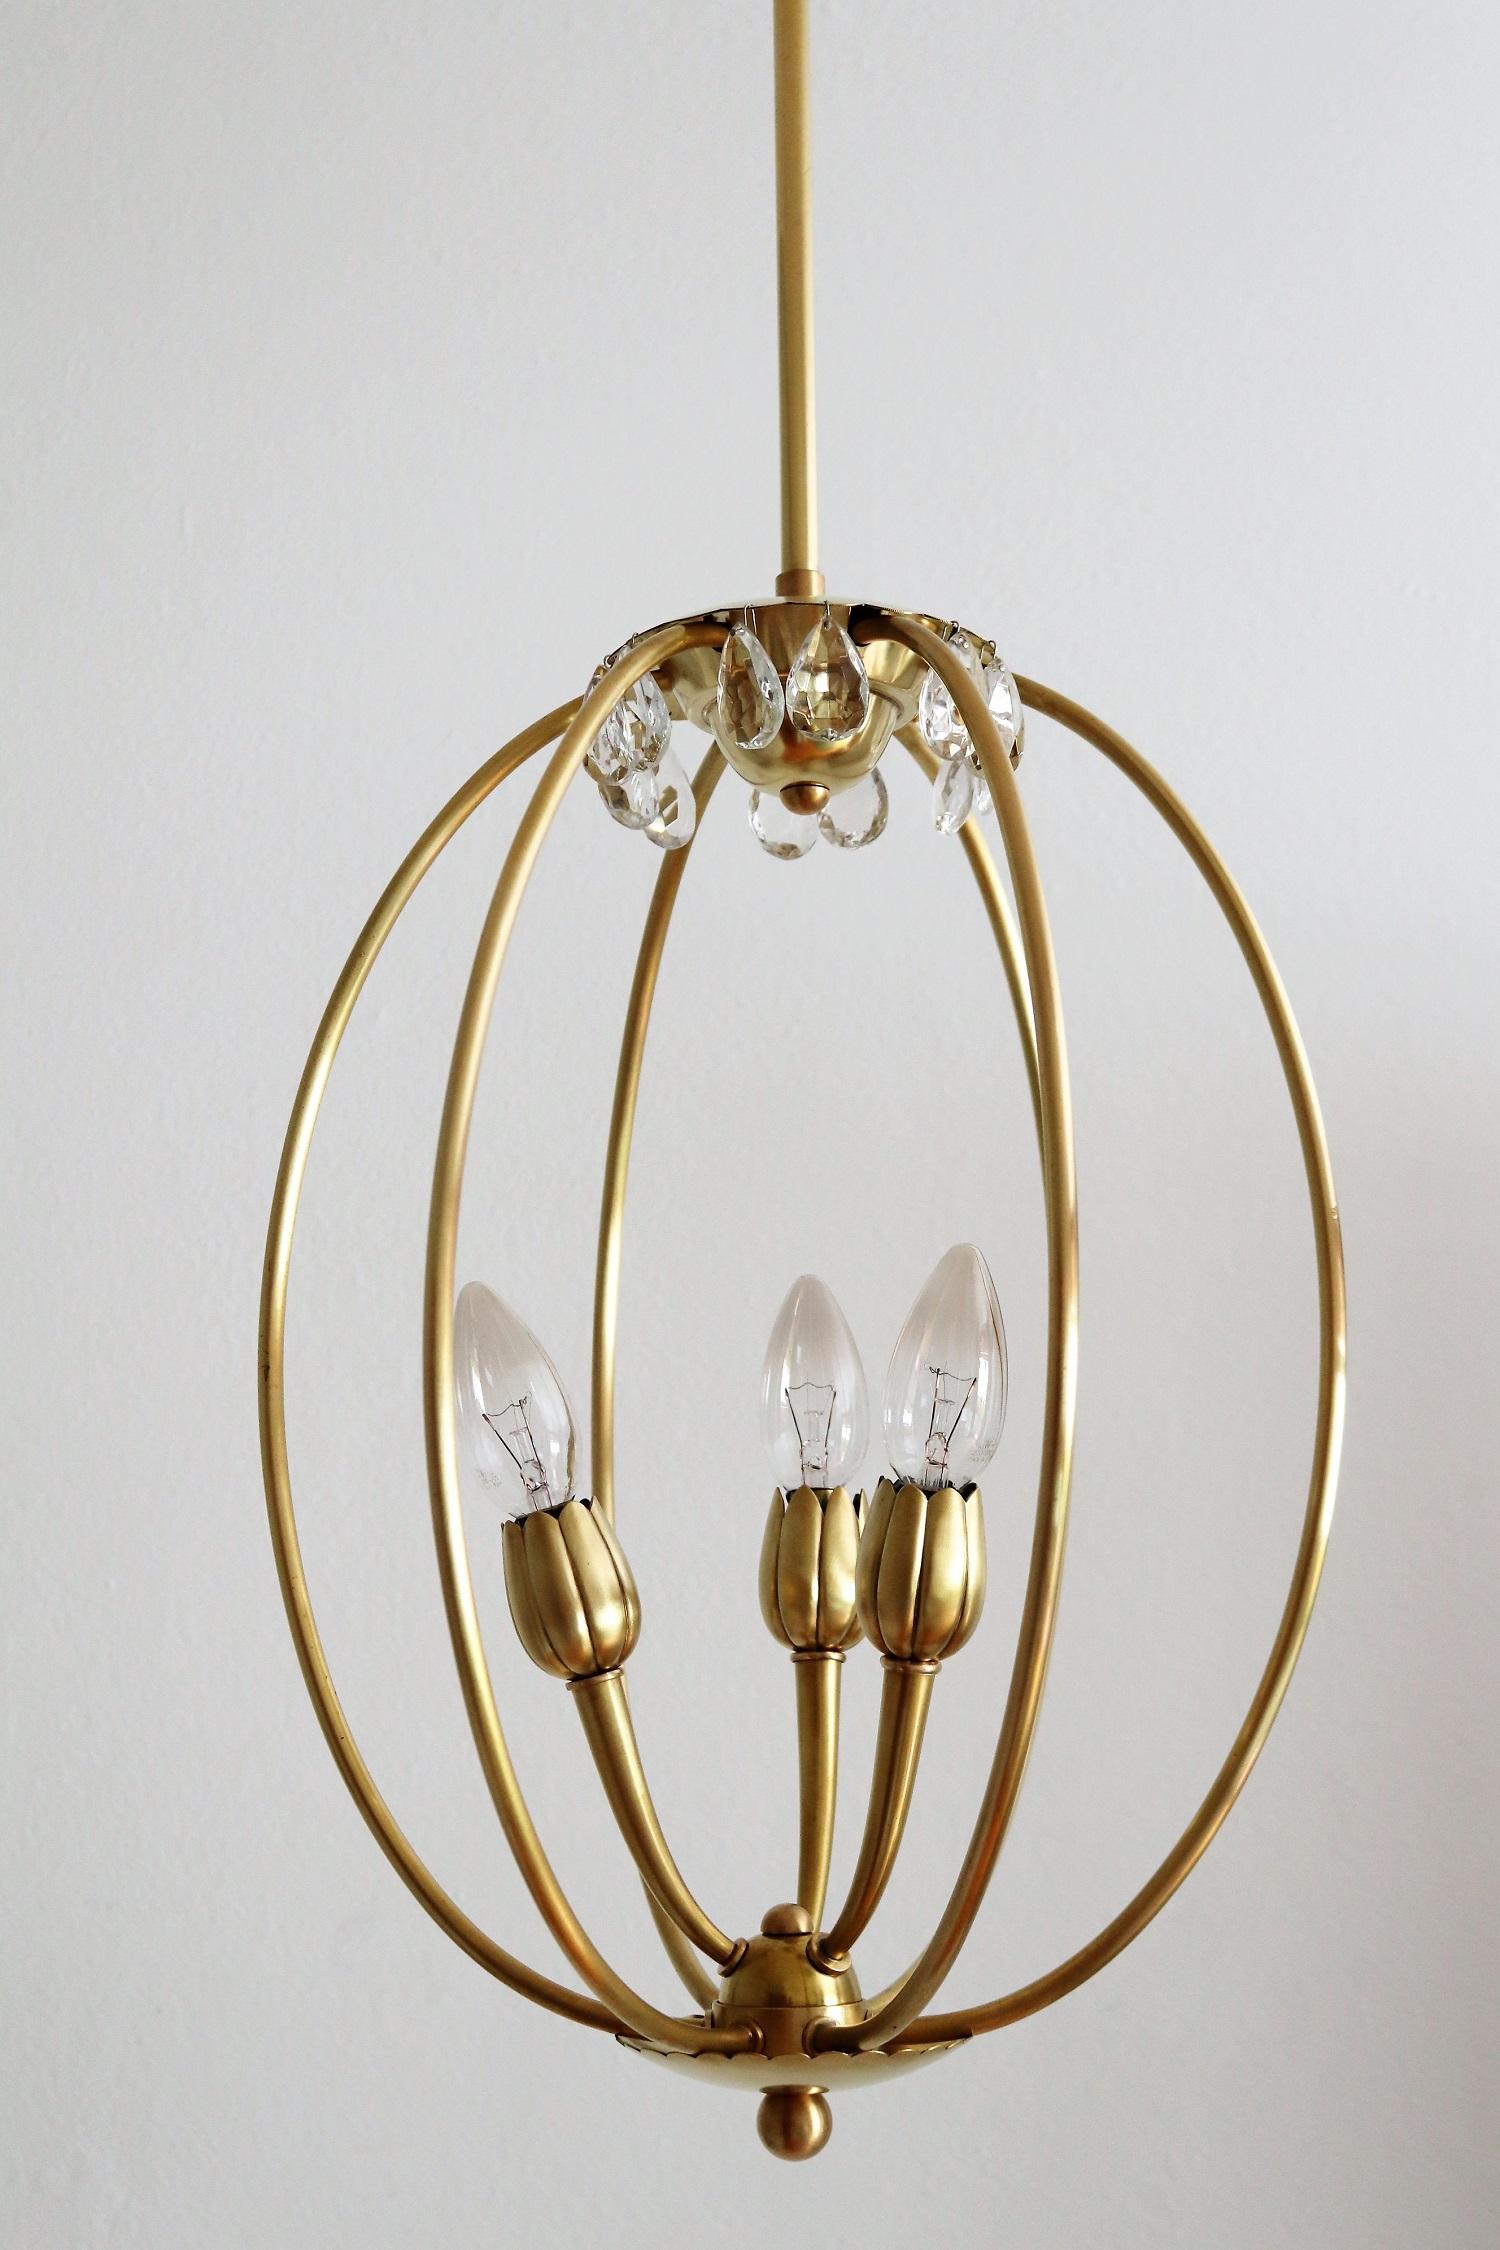 Mid-20th Century Italian Midcentury Brass Pendant Lamp in Minimal Design, 1950s